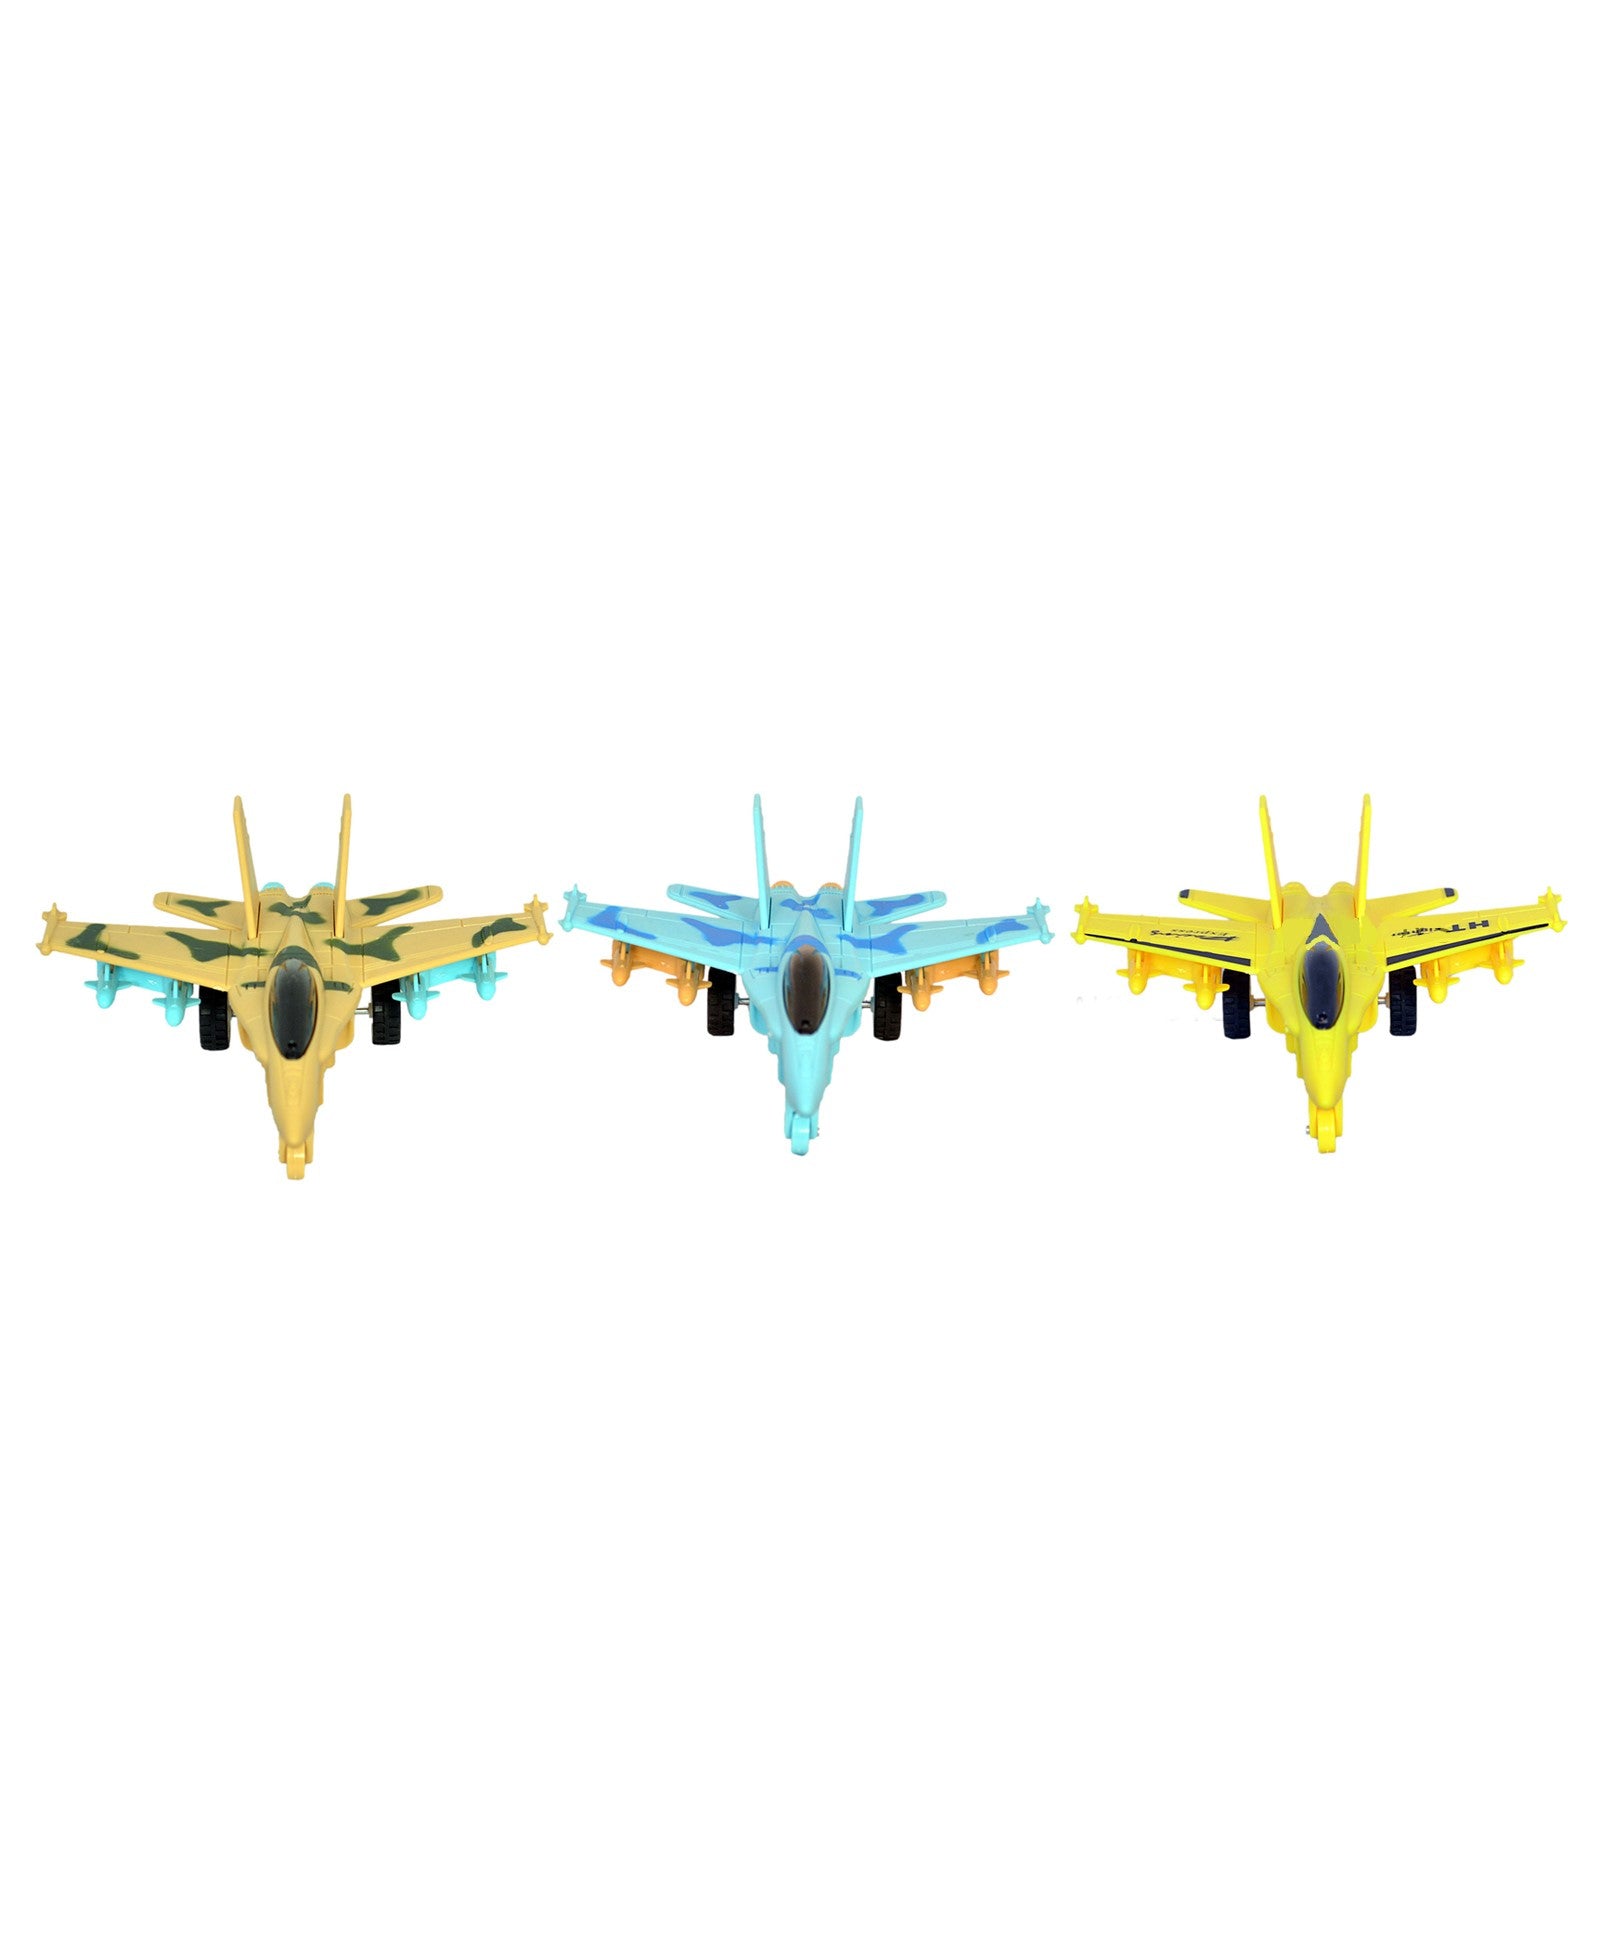 Fighter Jet Toy